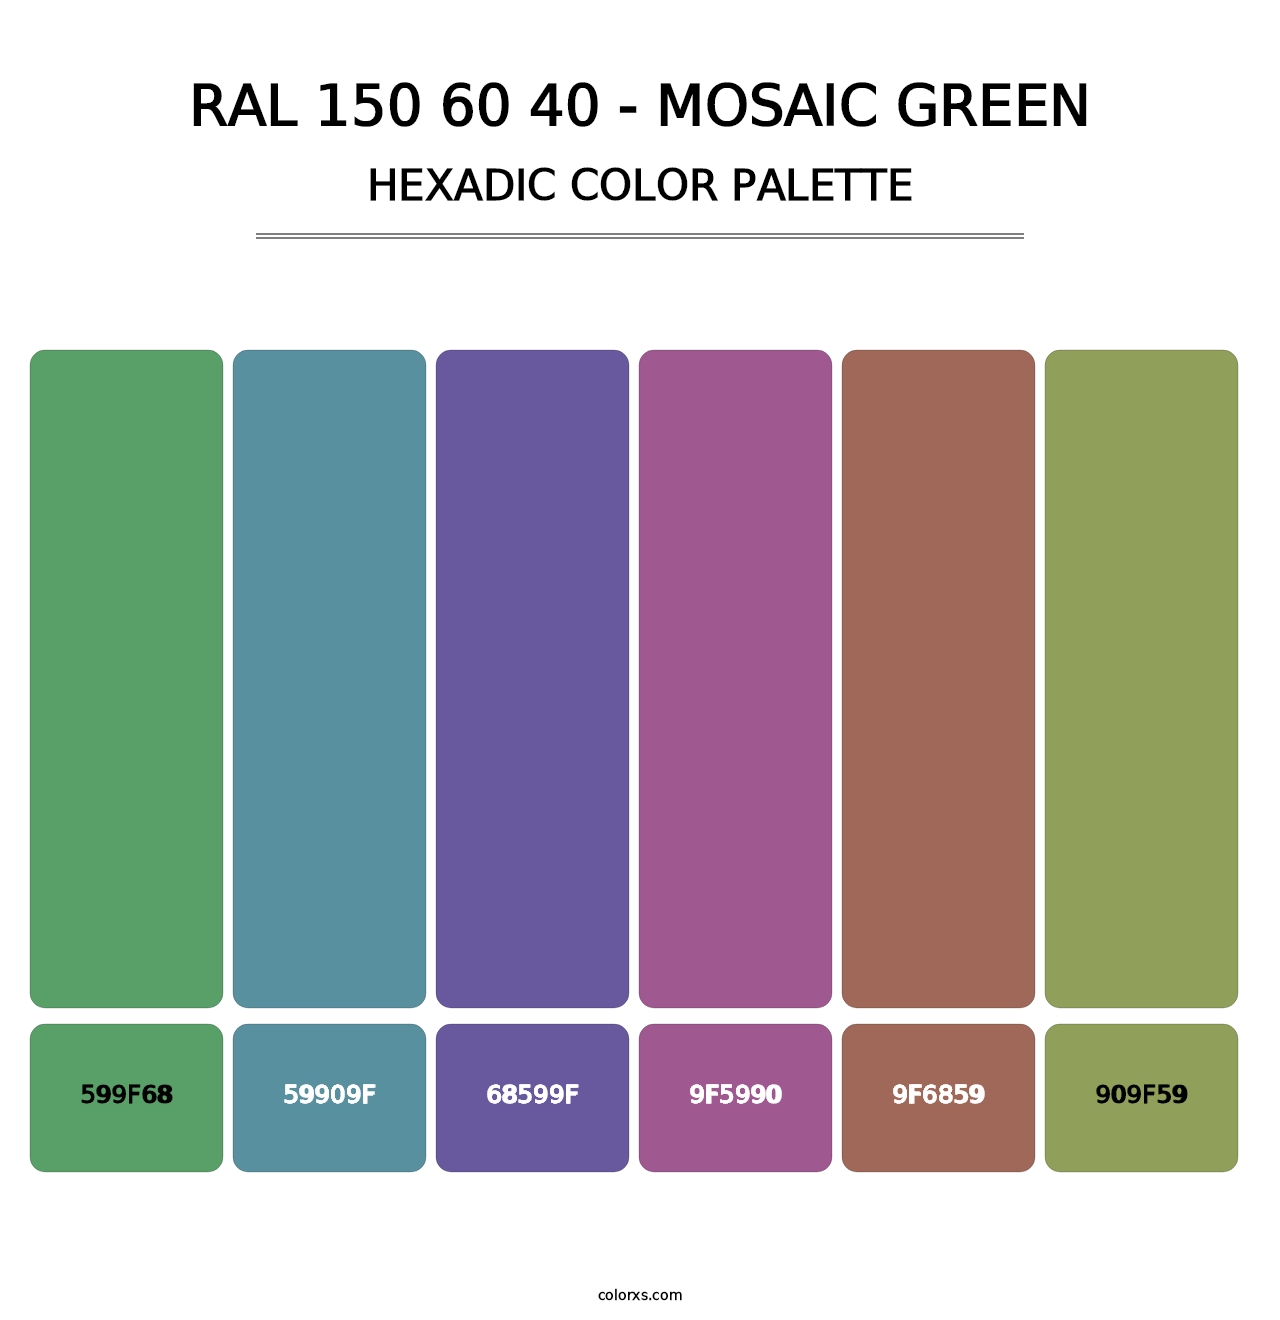 RAL 150 60 40 - Mosaic Green - Hexadic Color Palette